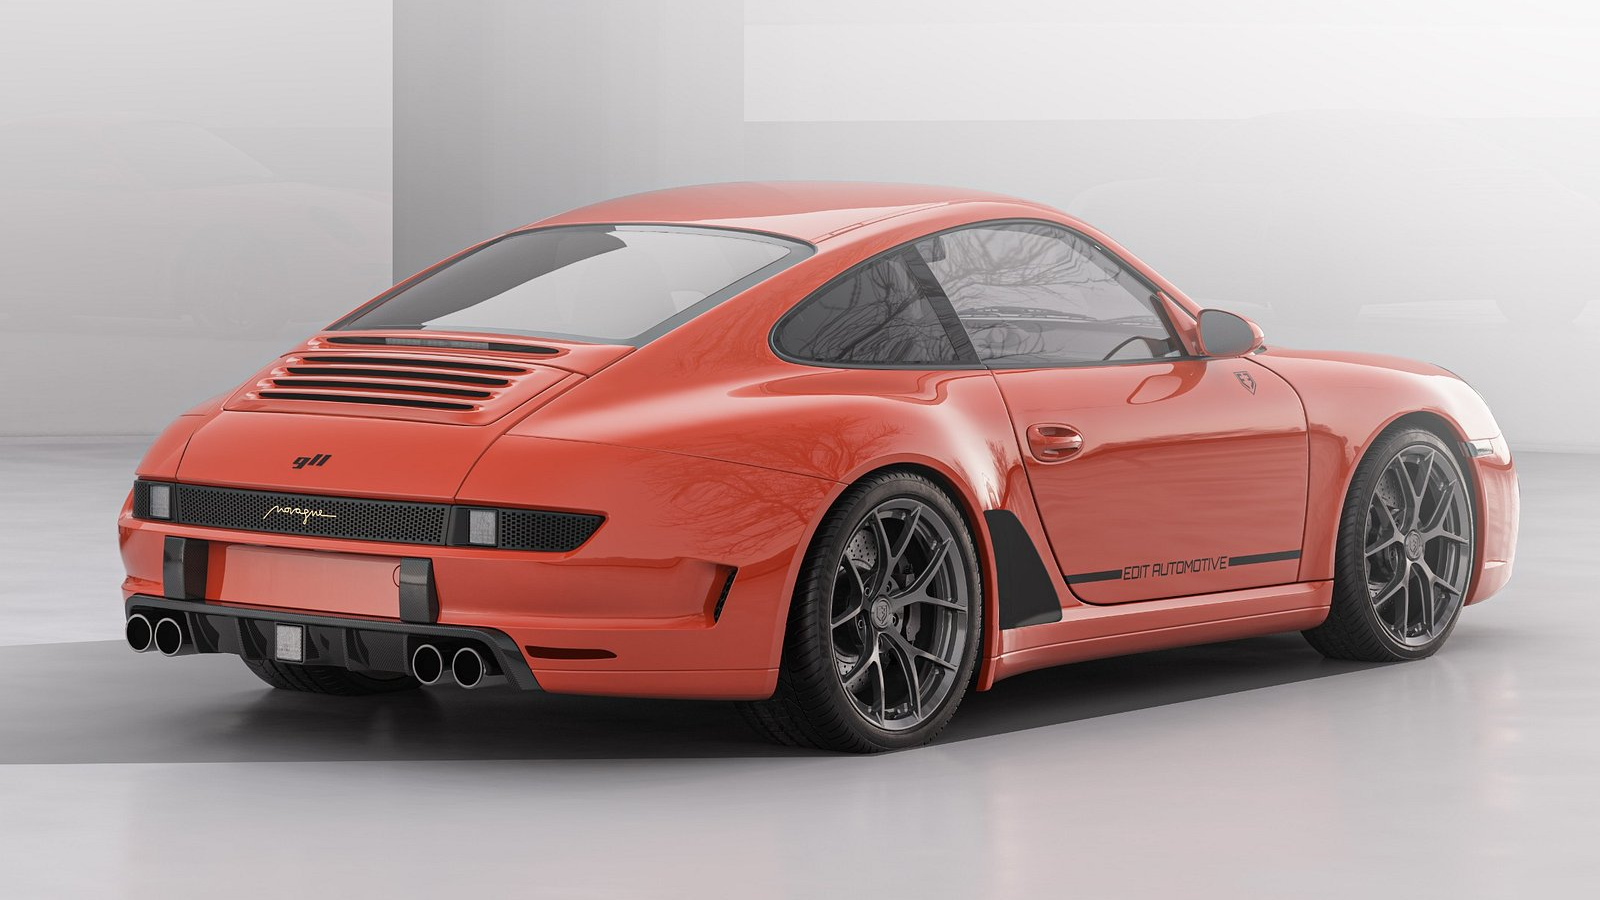 997 Porsche 911 Gets Interesting Redesign From Edit Automotive